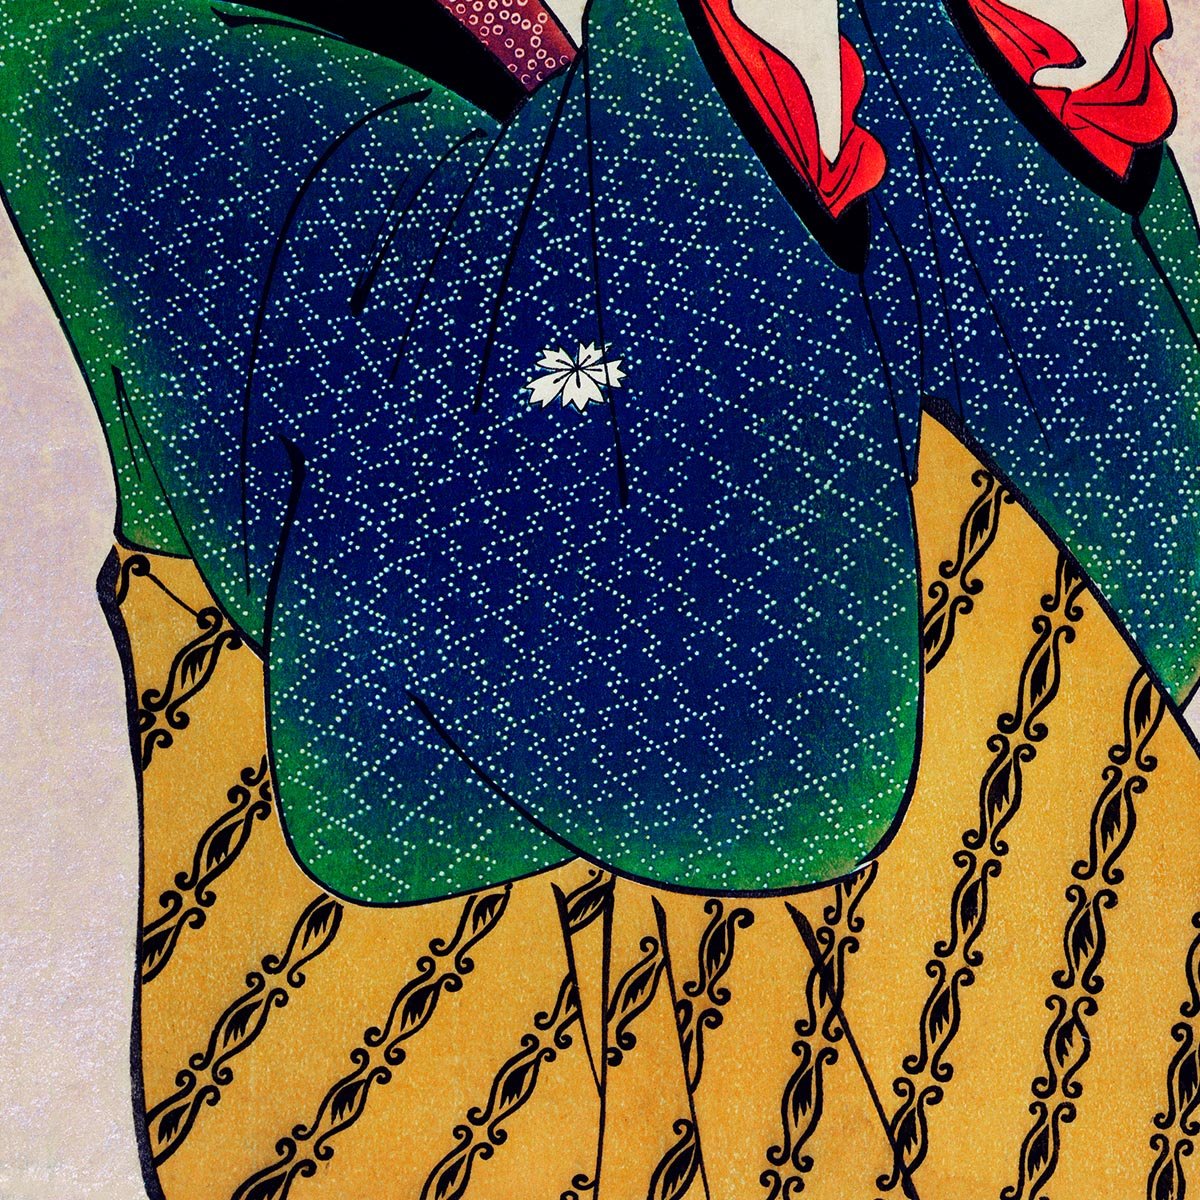 Geisha Fumi Yomu Onna by Kitagawa Utamaro